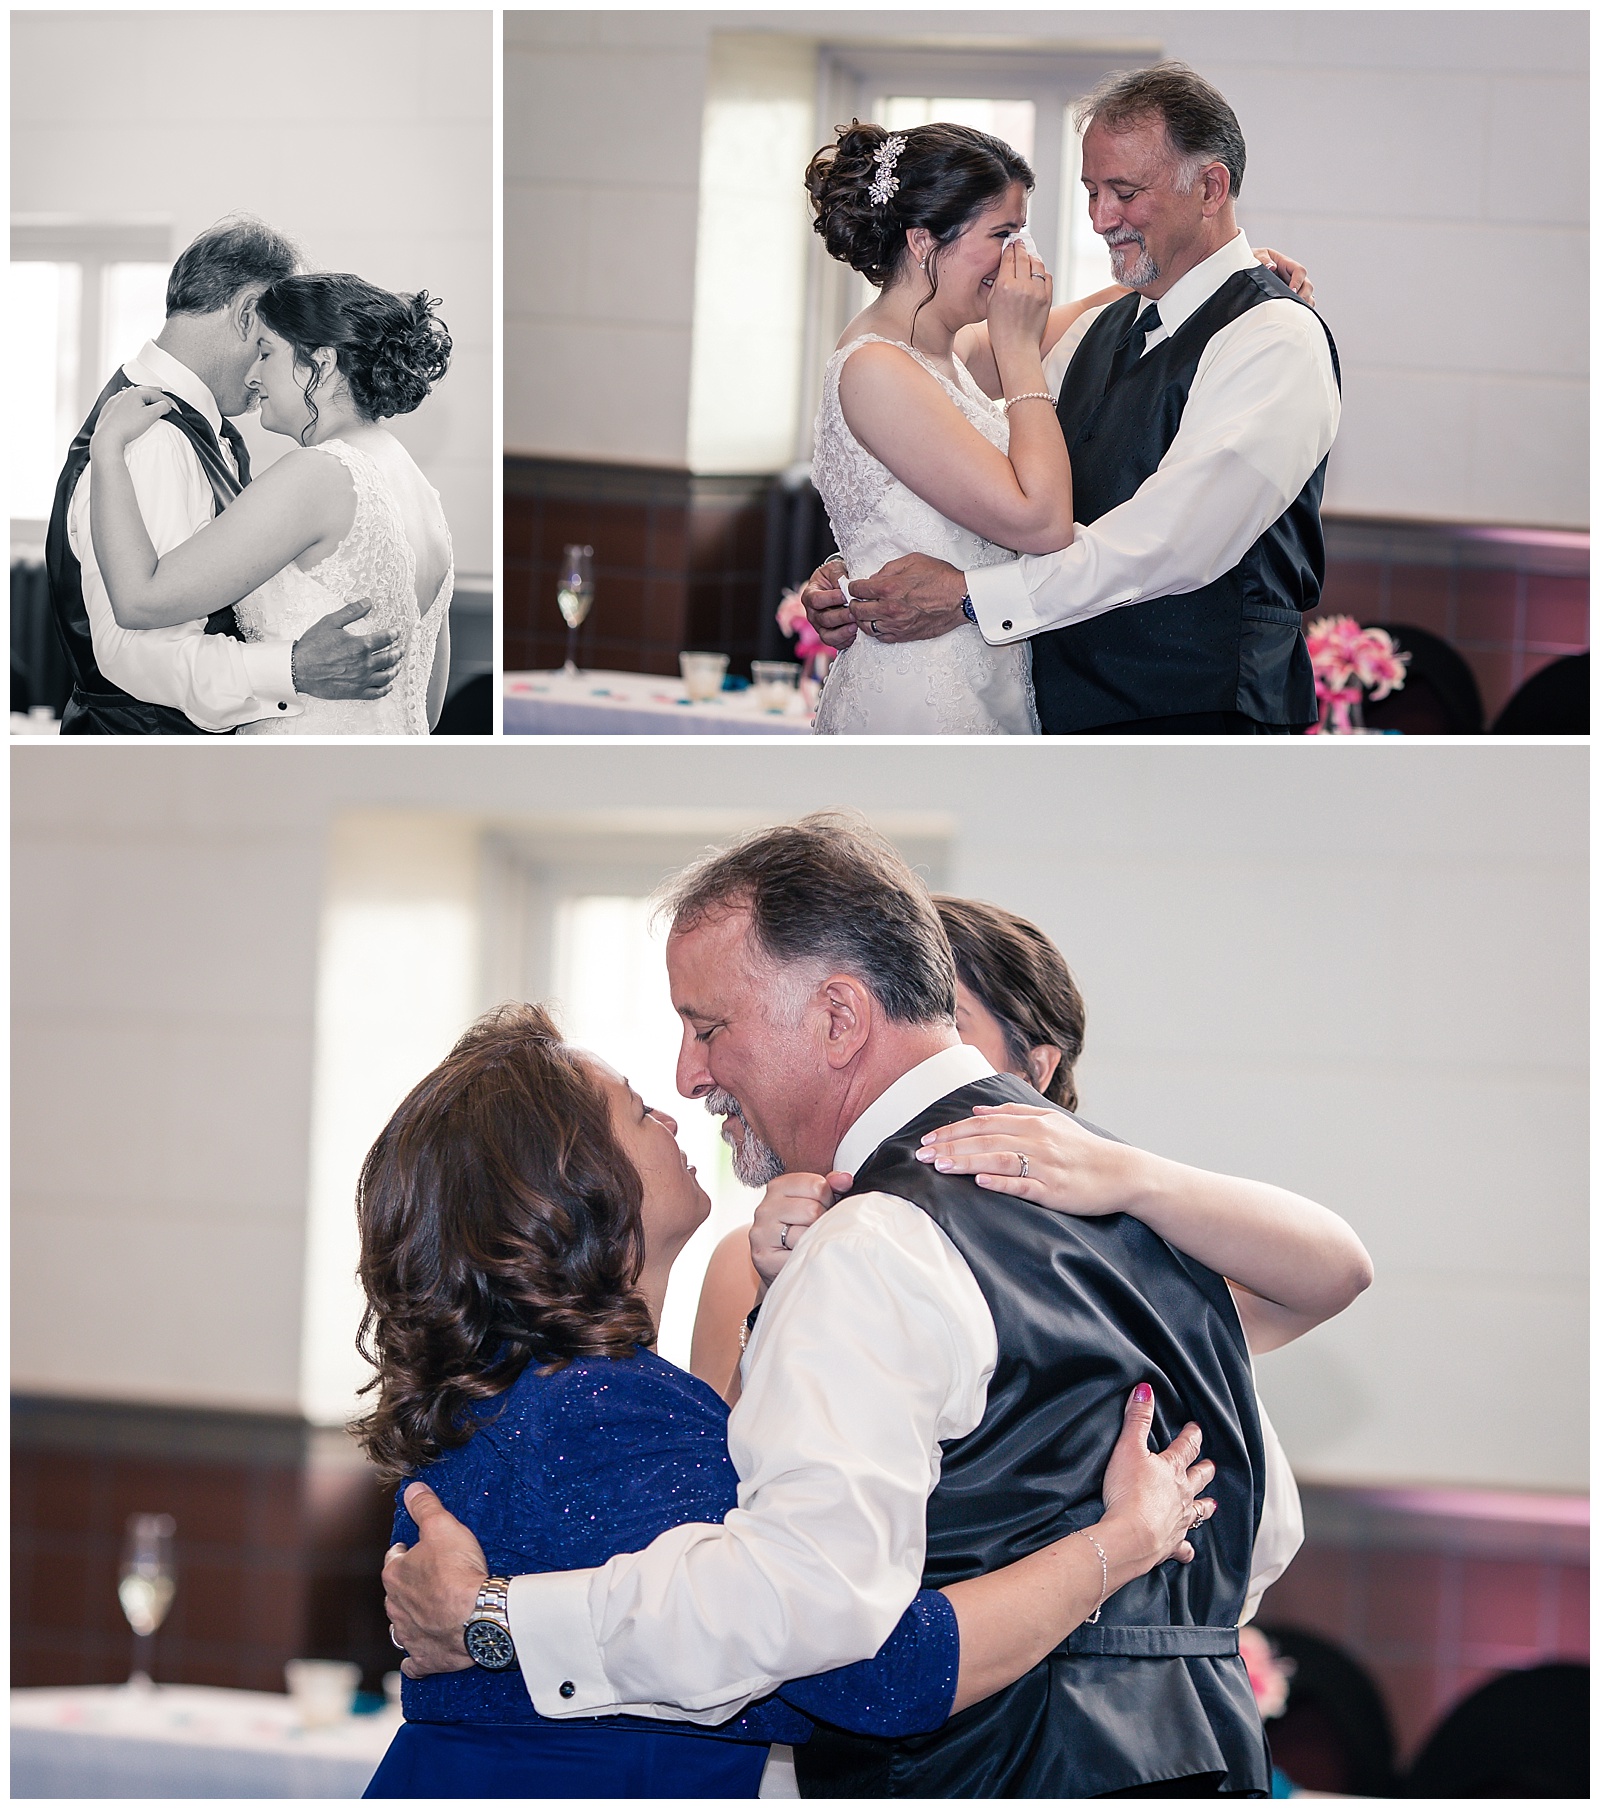 Wedding photography at Great Overland Station in Topeka, Kansas.